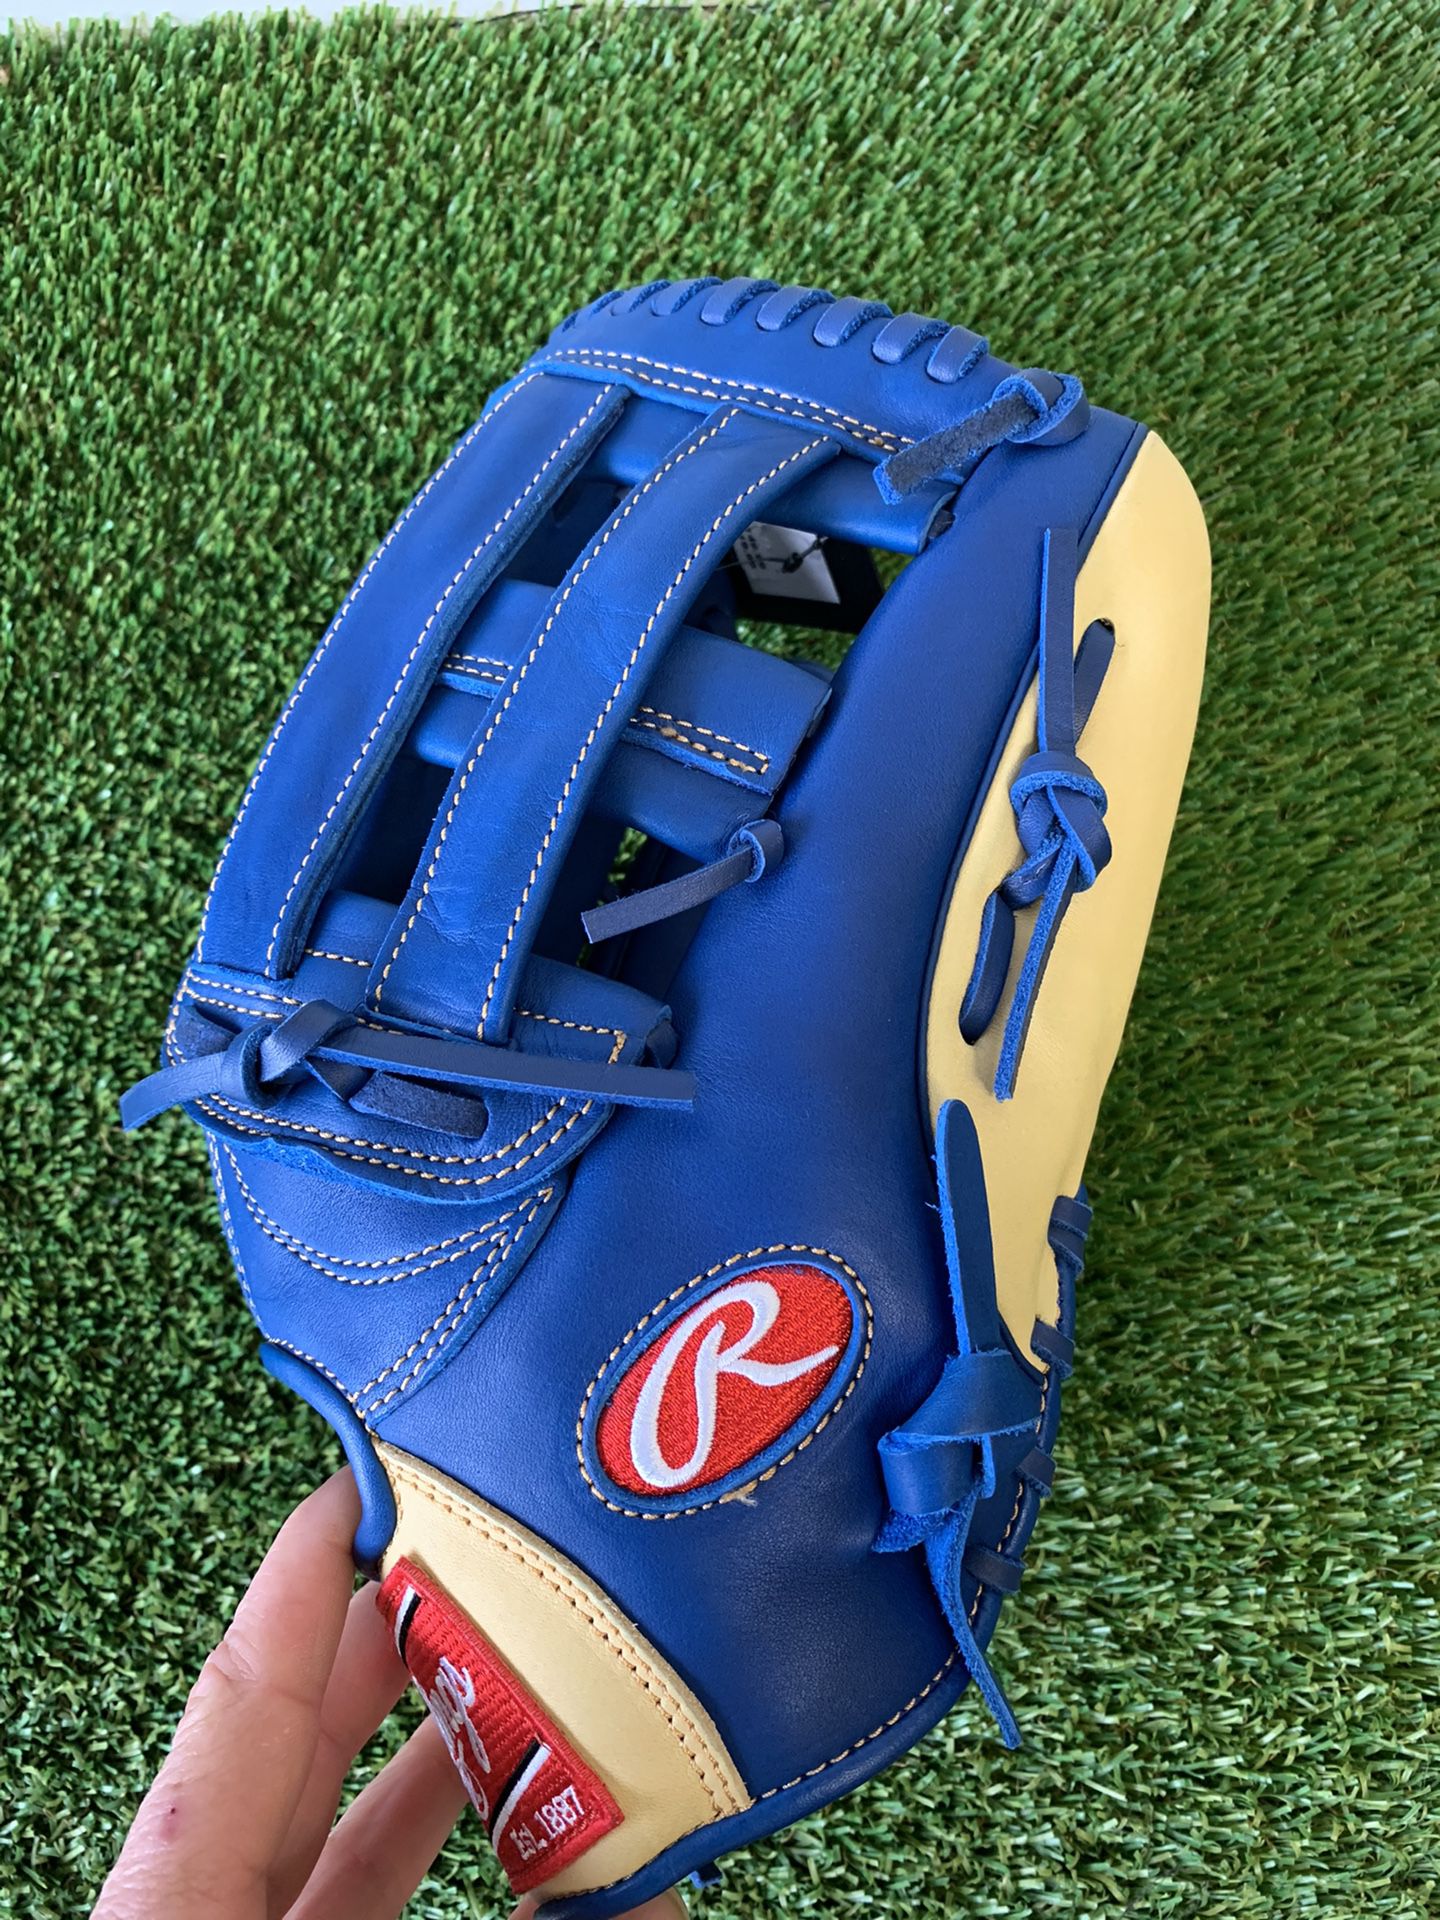 Brand New Rawlings GG Elite 12.75 Baseball Softball Glove